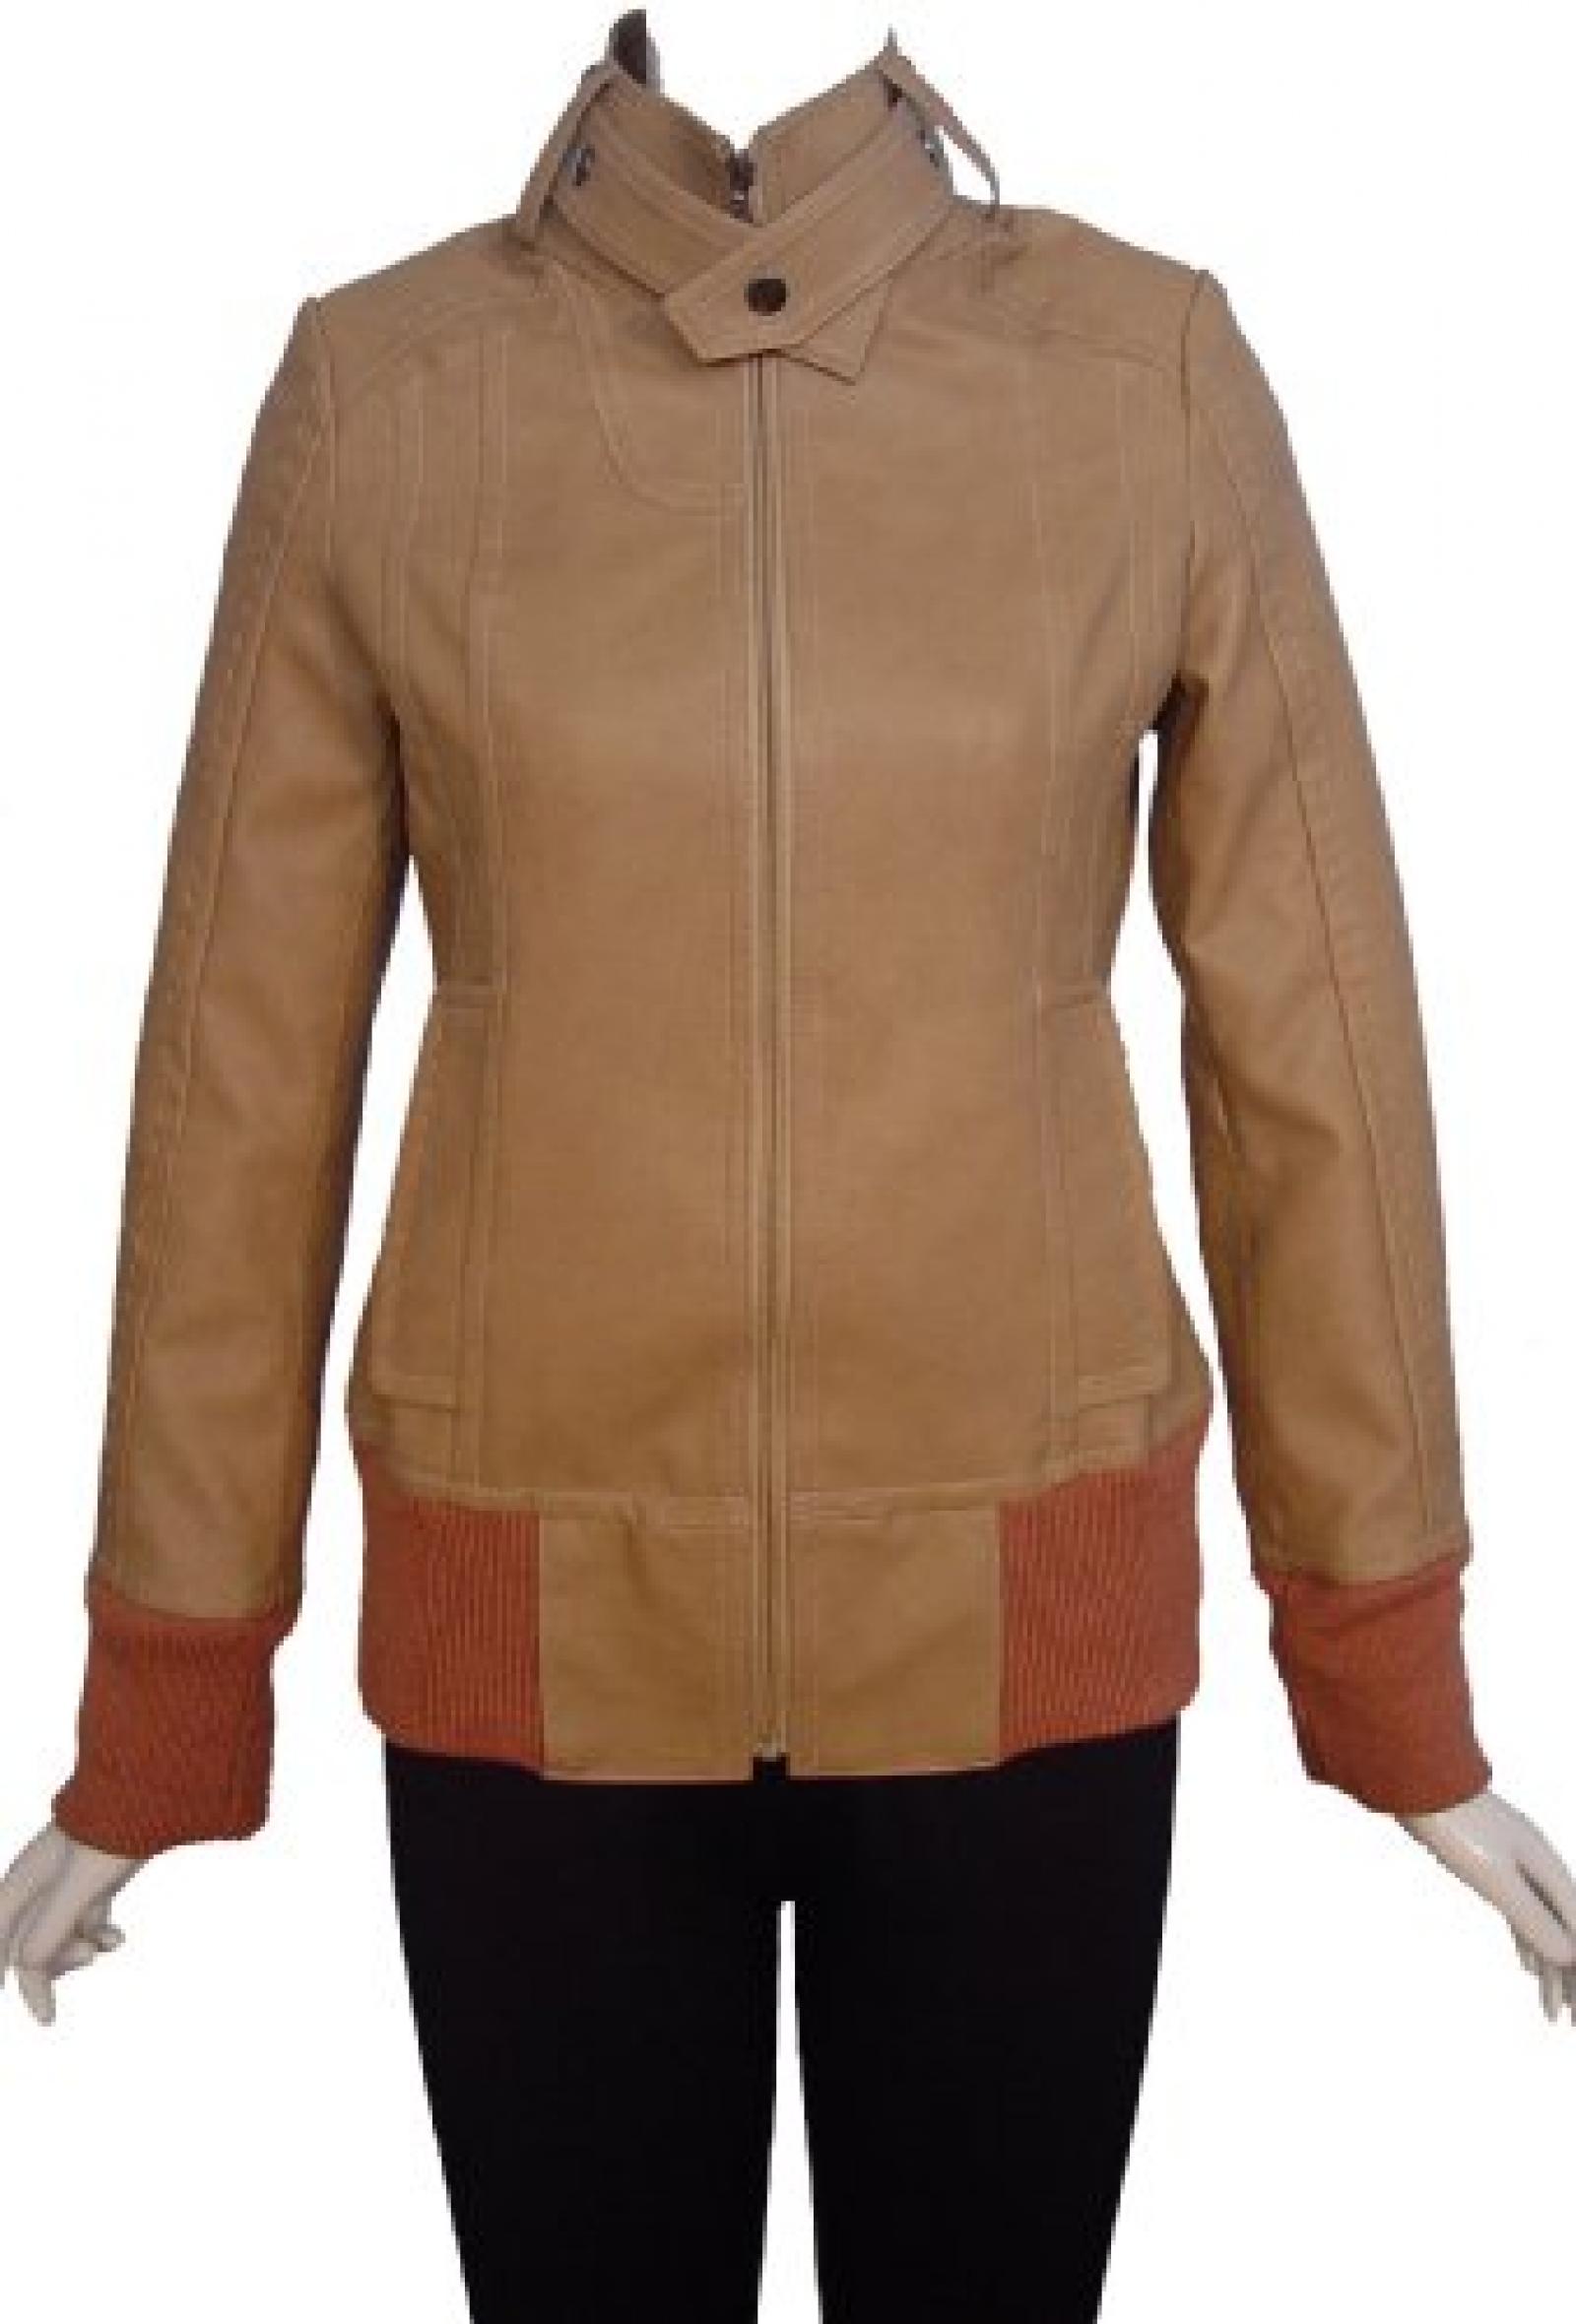 Nettailor Women 4206 Soft Leather Casual Short Jacket Zip Front Knit Cuff Bottom 